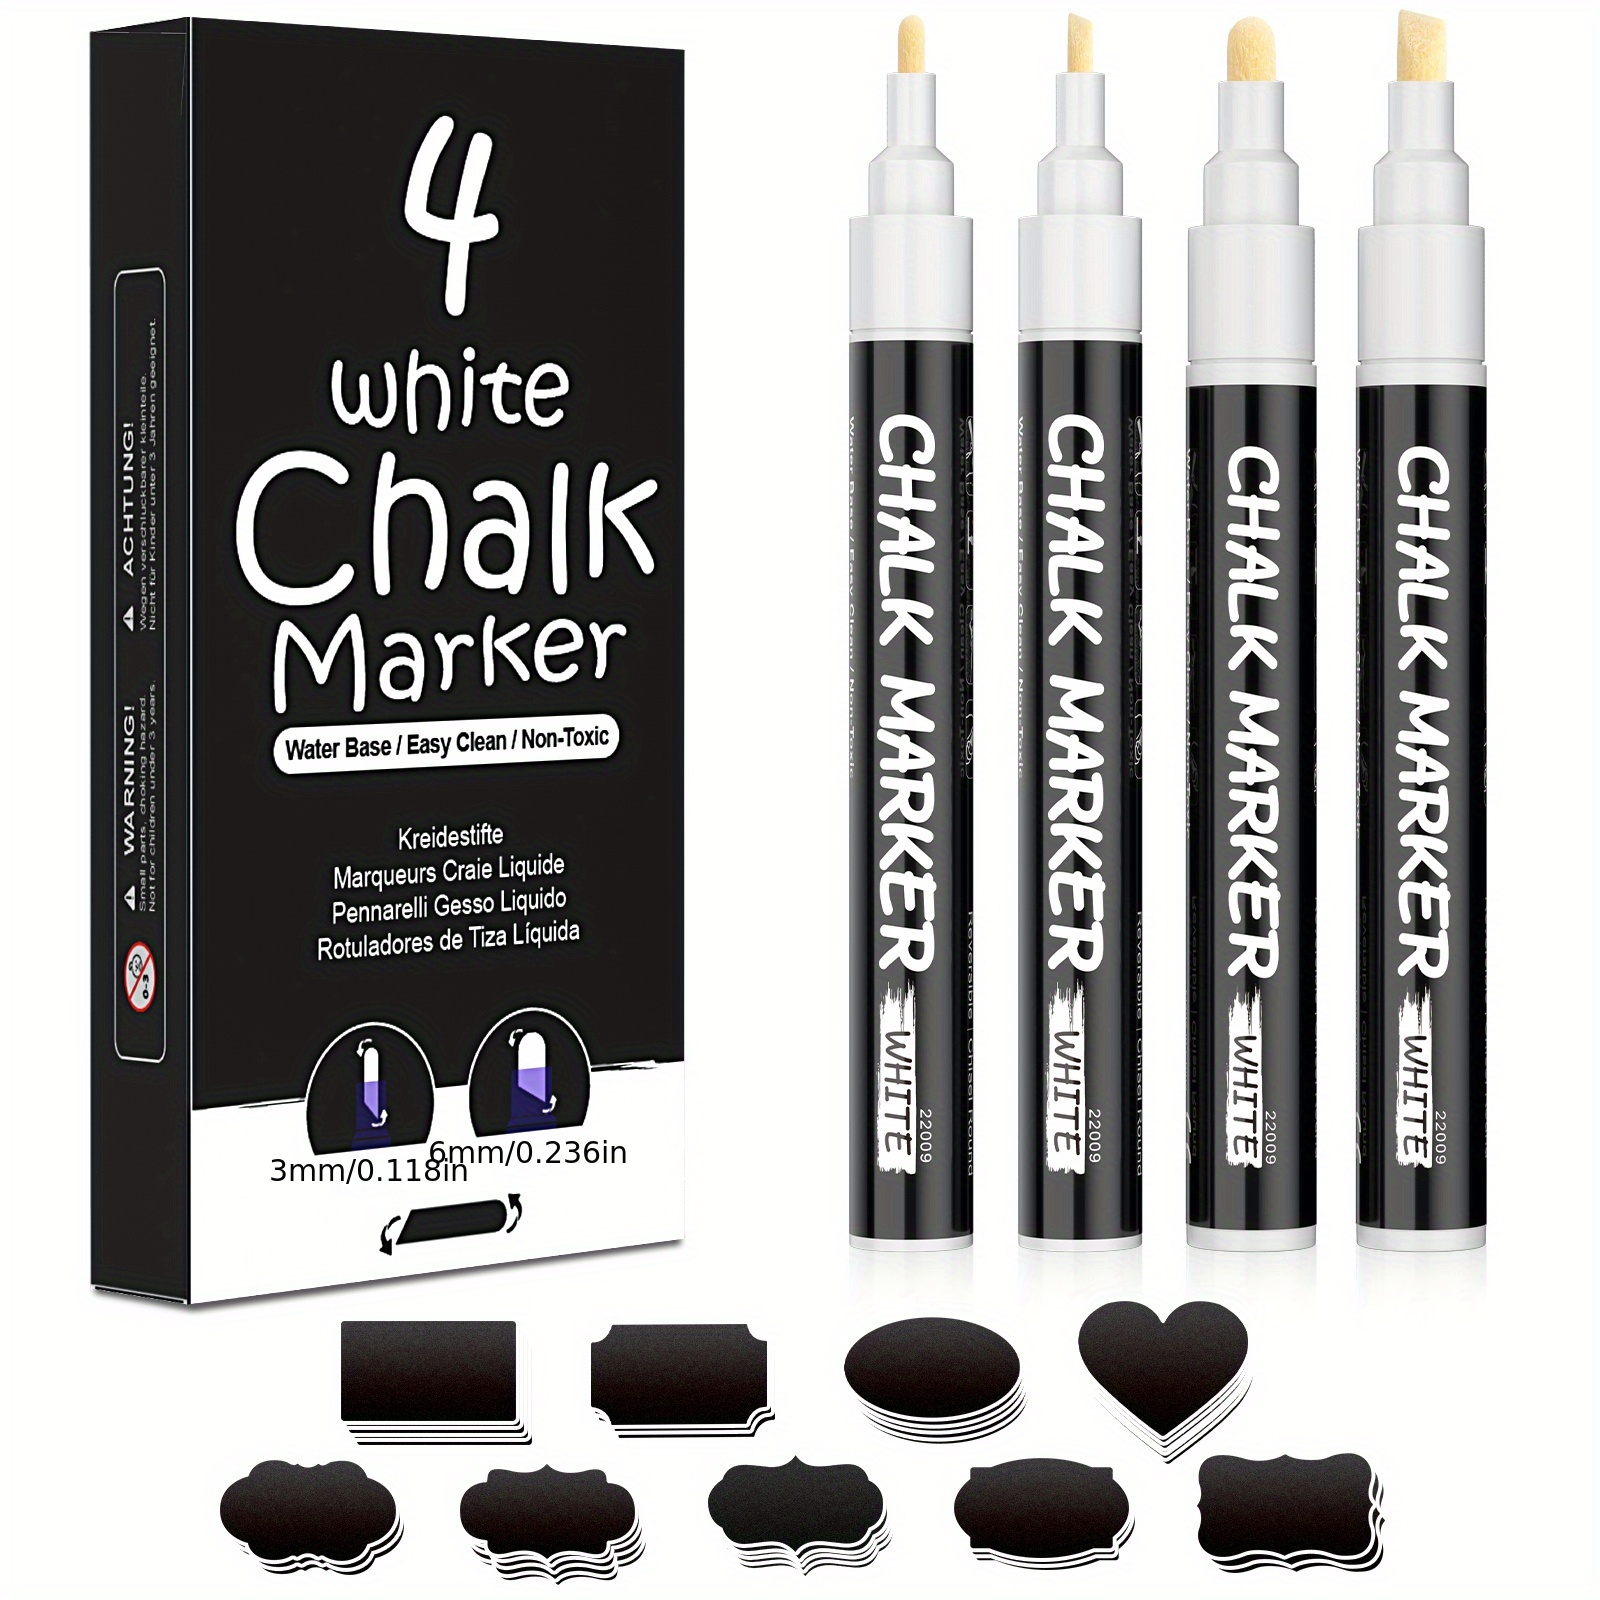 4pcs White Liquid Chalk Pens Teacher Teaching Tool Blackboard Wall Writing  Painting Brush Removable Marking Stationery - AliExpress